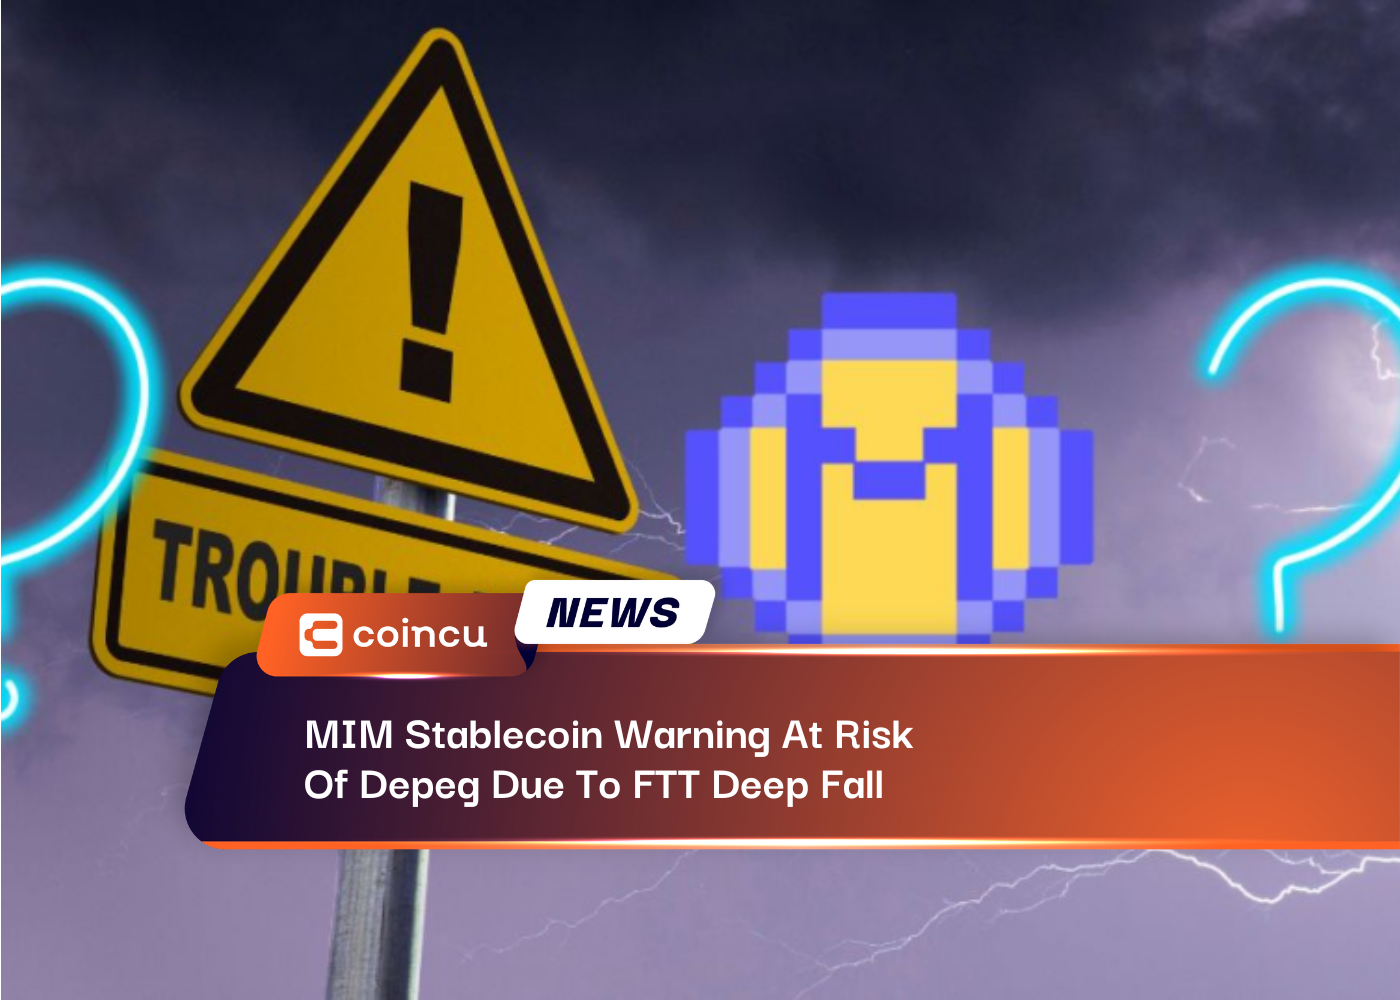 MIM Stablecoin Warning At Risk Of Depeg Due To FTT Deep Fall